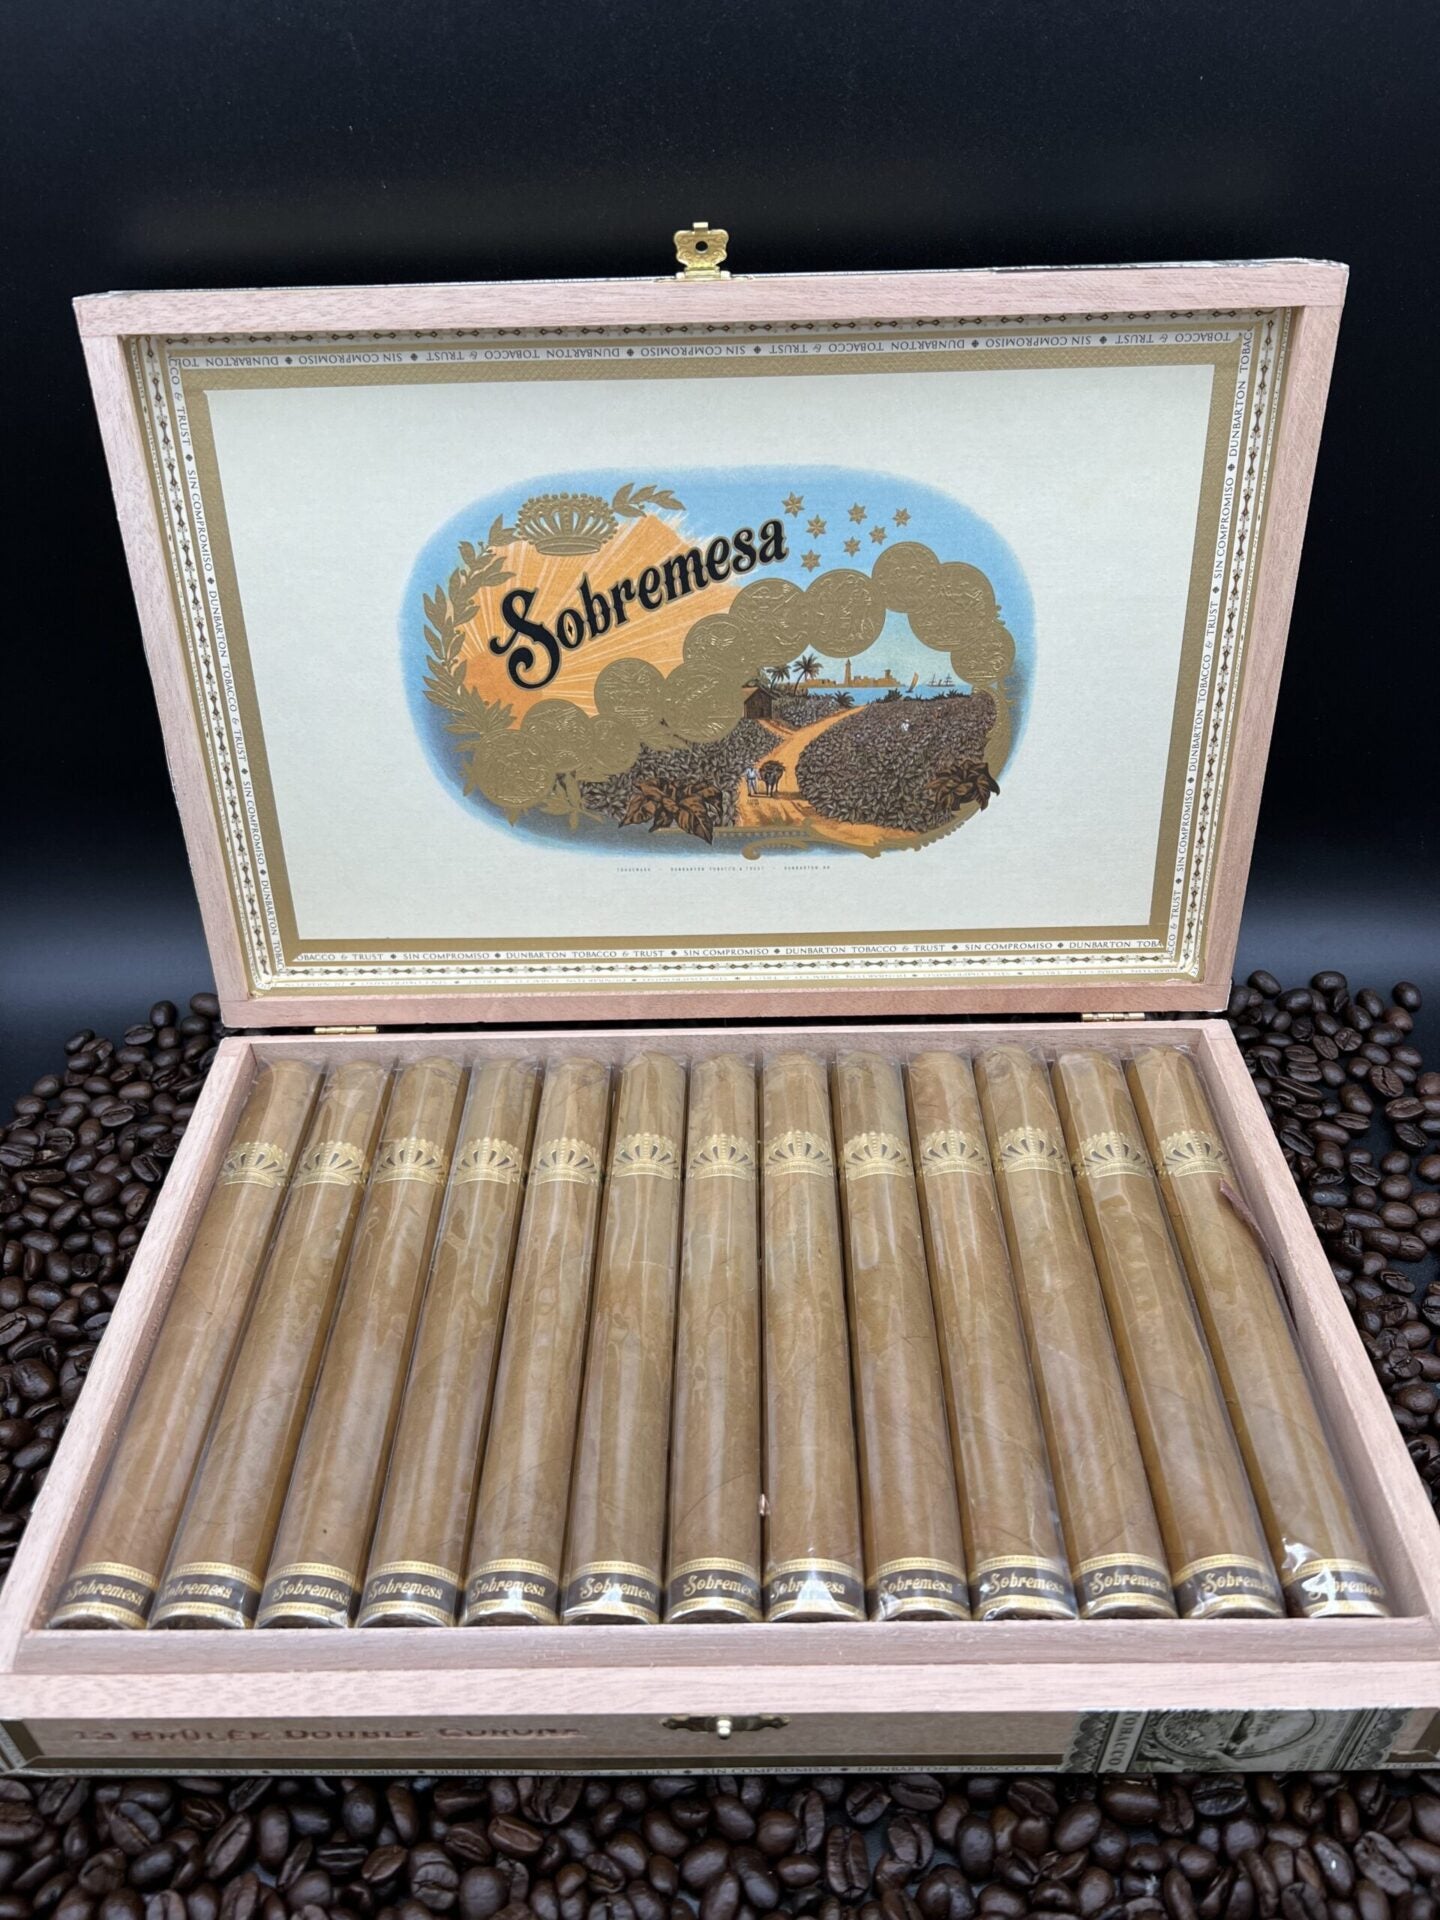 Dunbarton Tobacco & Trust-Sobremesa Brulee Double Corona cigars supplied by Sir Louis Cigars